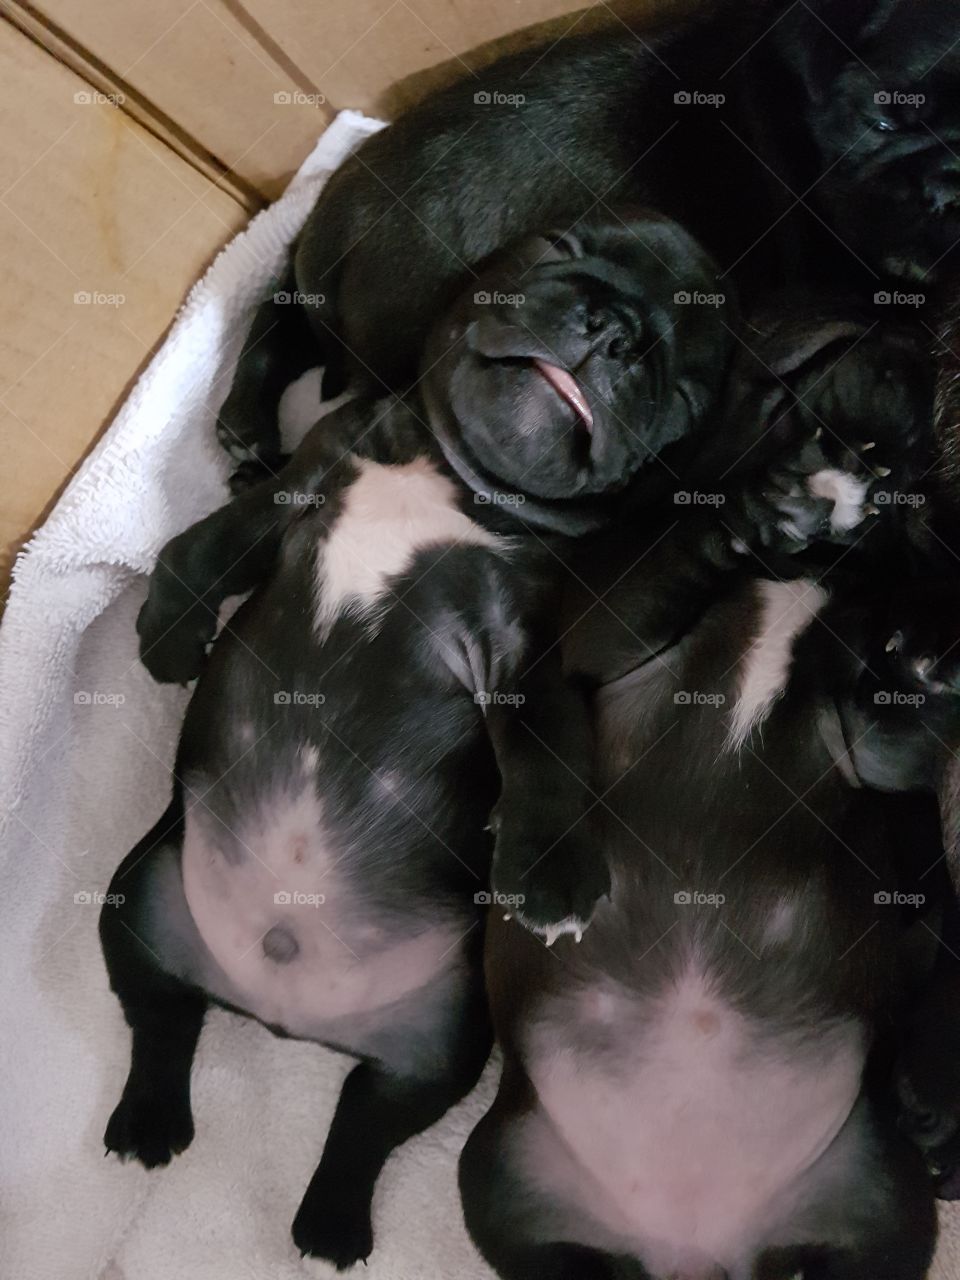 Pug puppies sleeping on their backs.